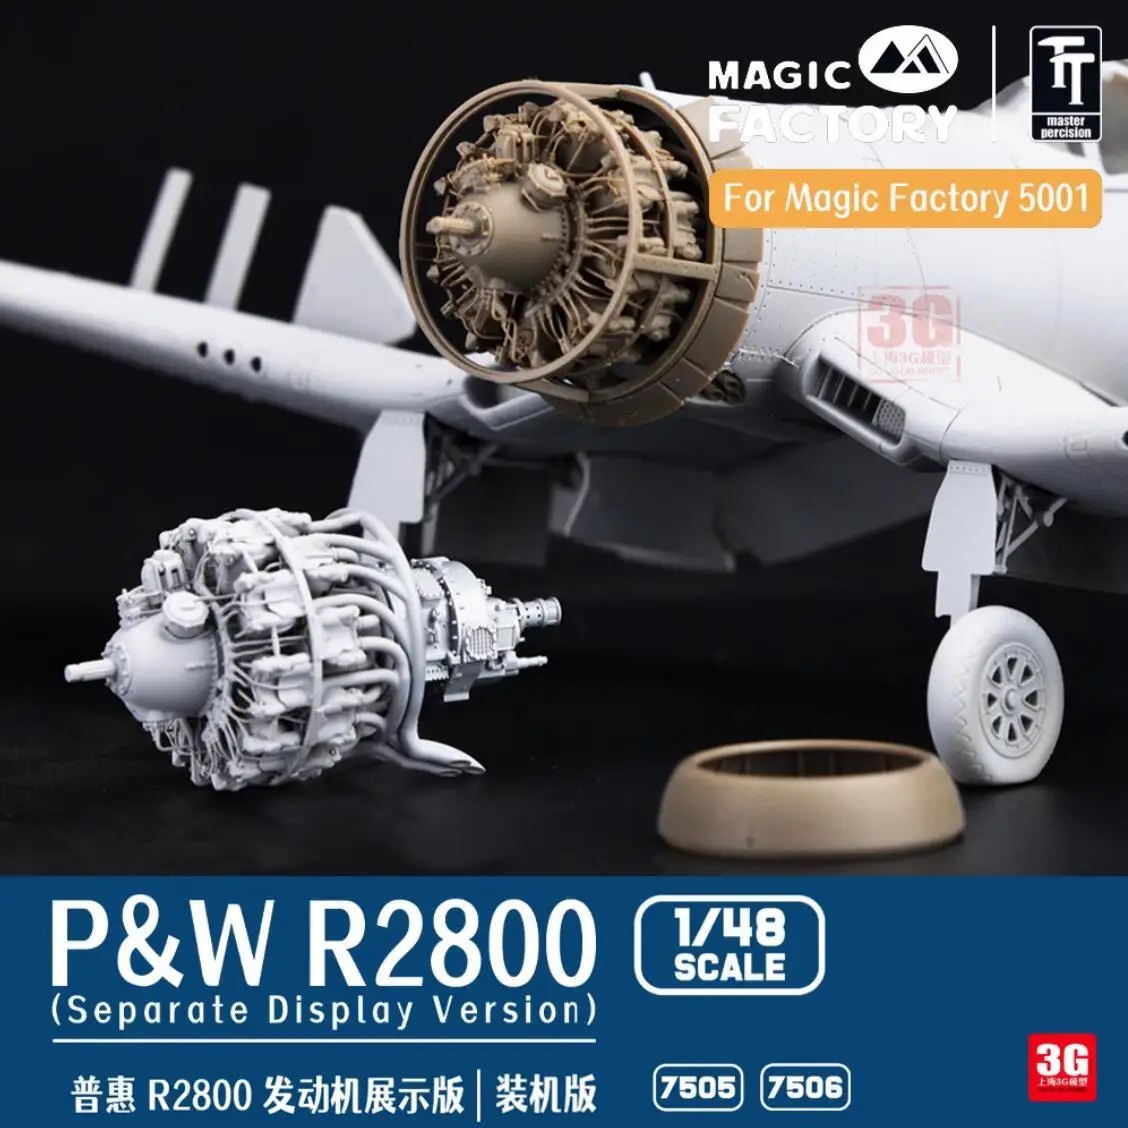 7505  дополнения из смолы  P&W R2800 for Magic Factory 5001 Separate Display Version  (1:48)